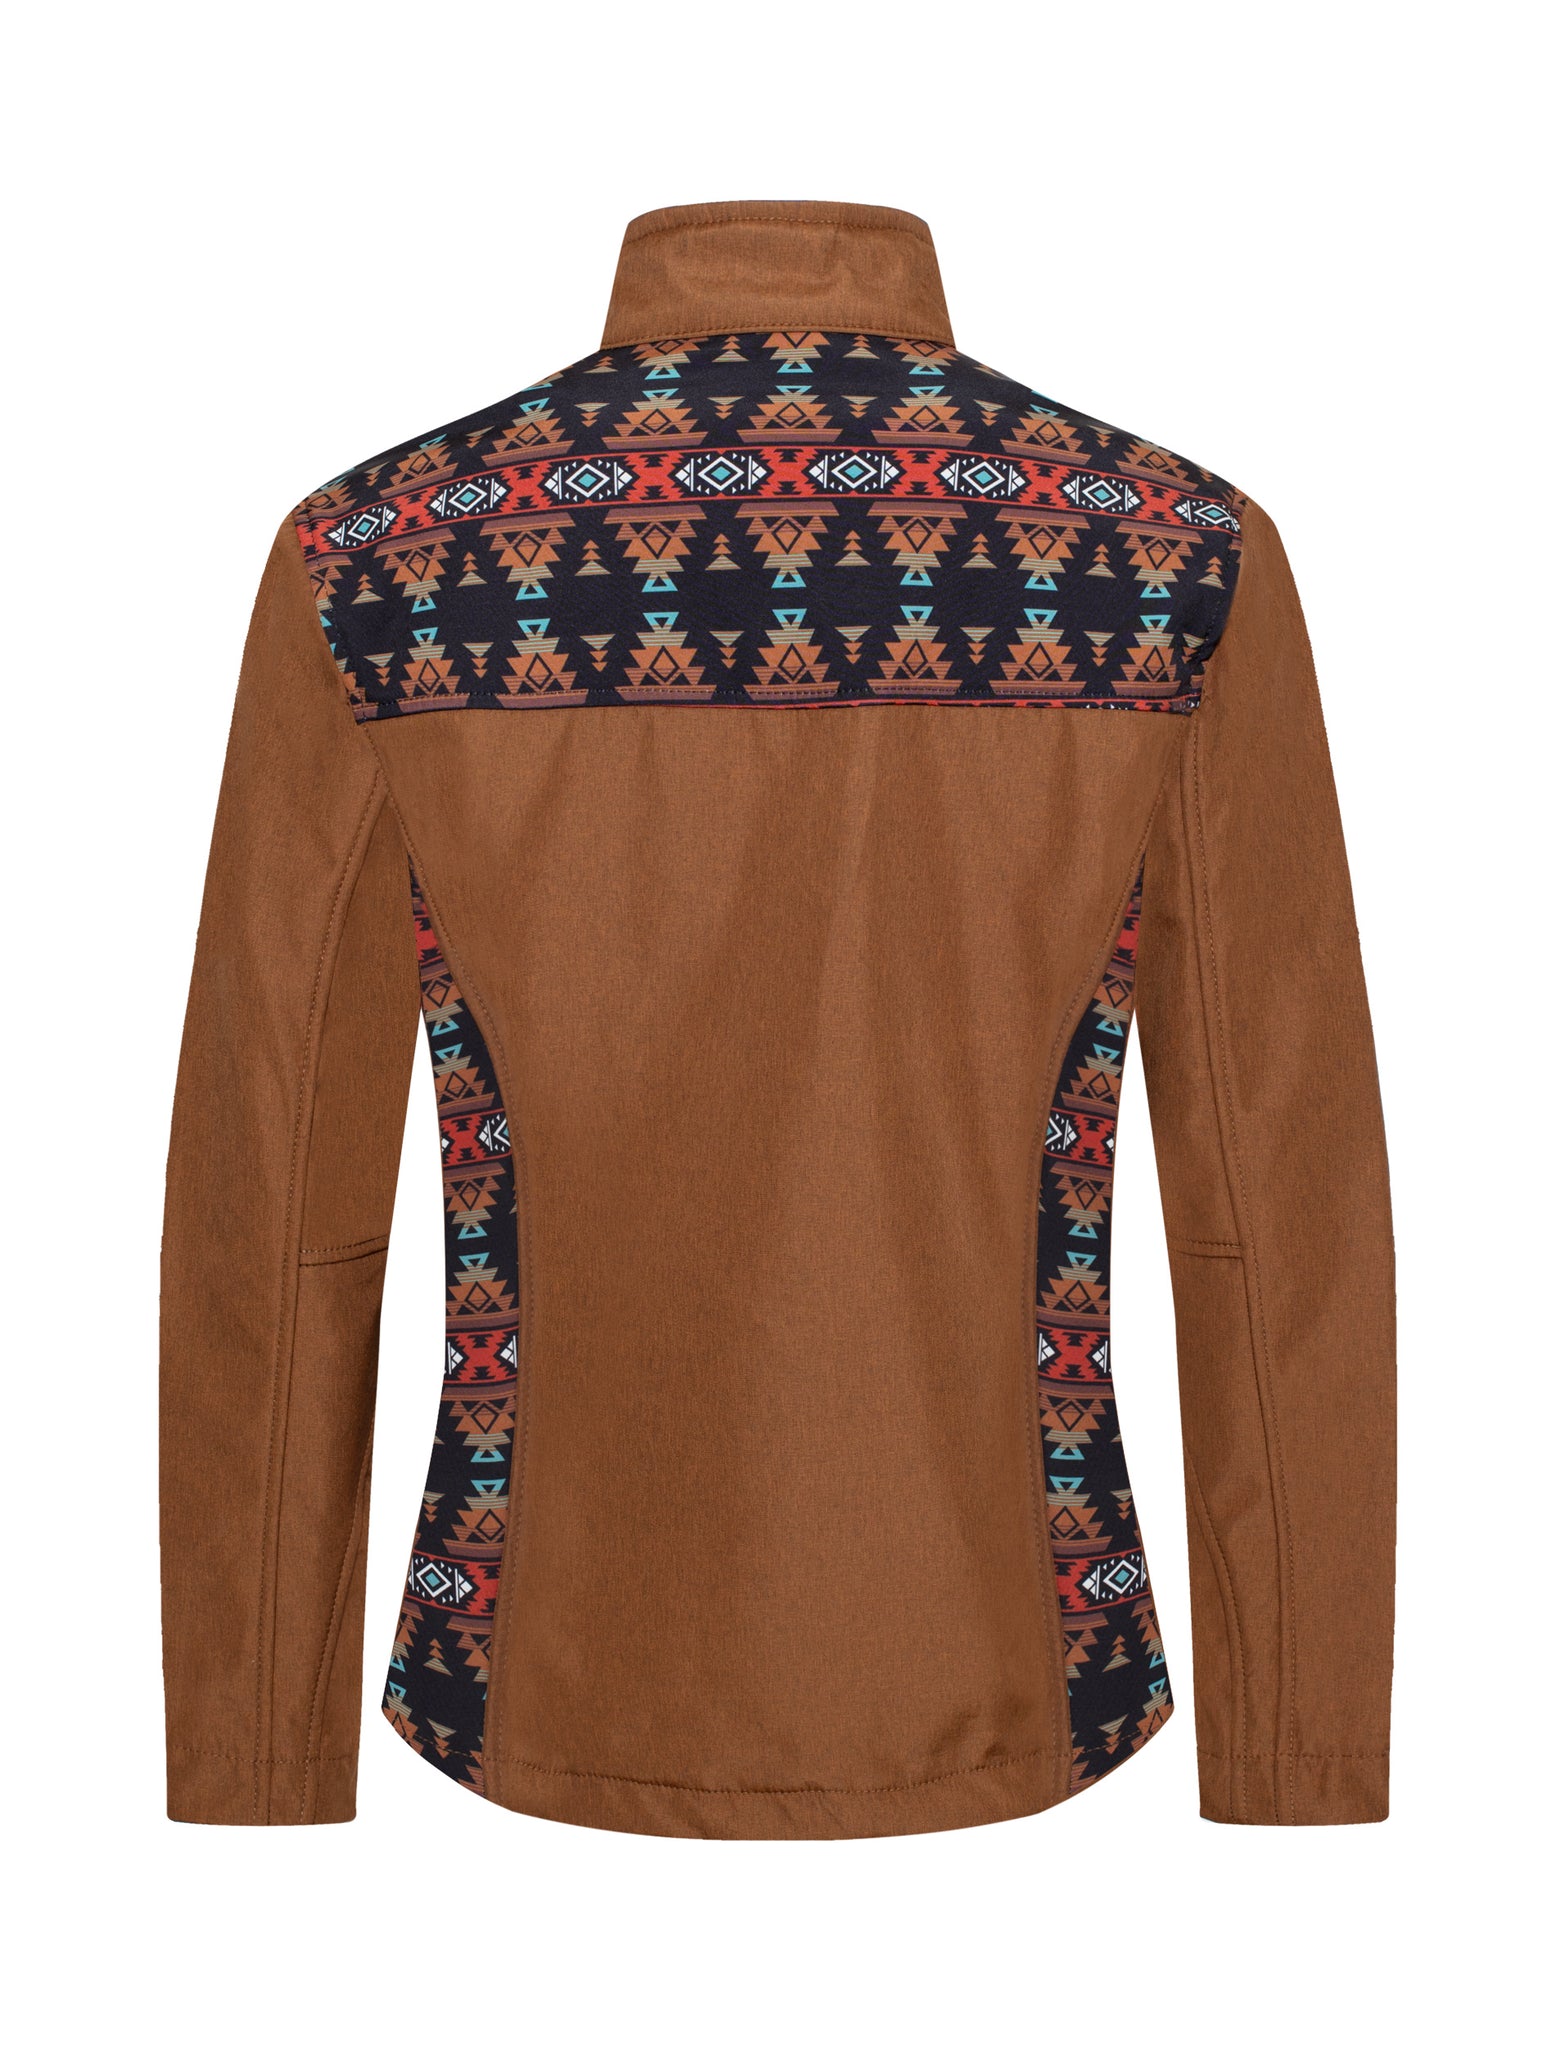 Women's Western Aztec Print Jacket -LJ650EMB-AZ-COGNAC-RUST